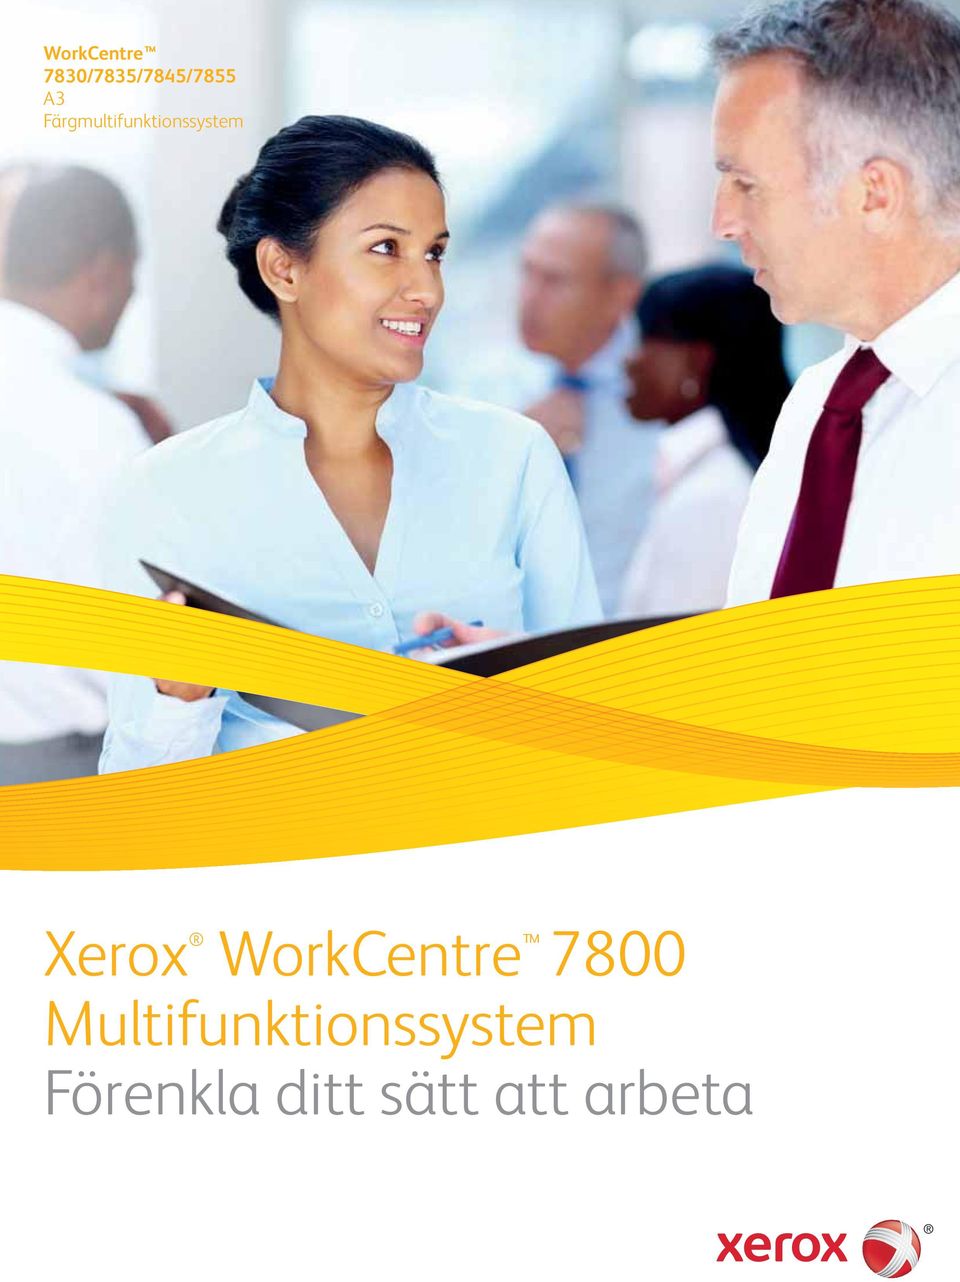 Xerox WorkCentre 7800